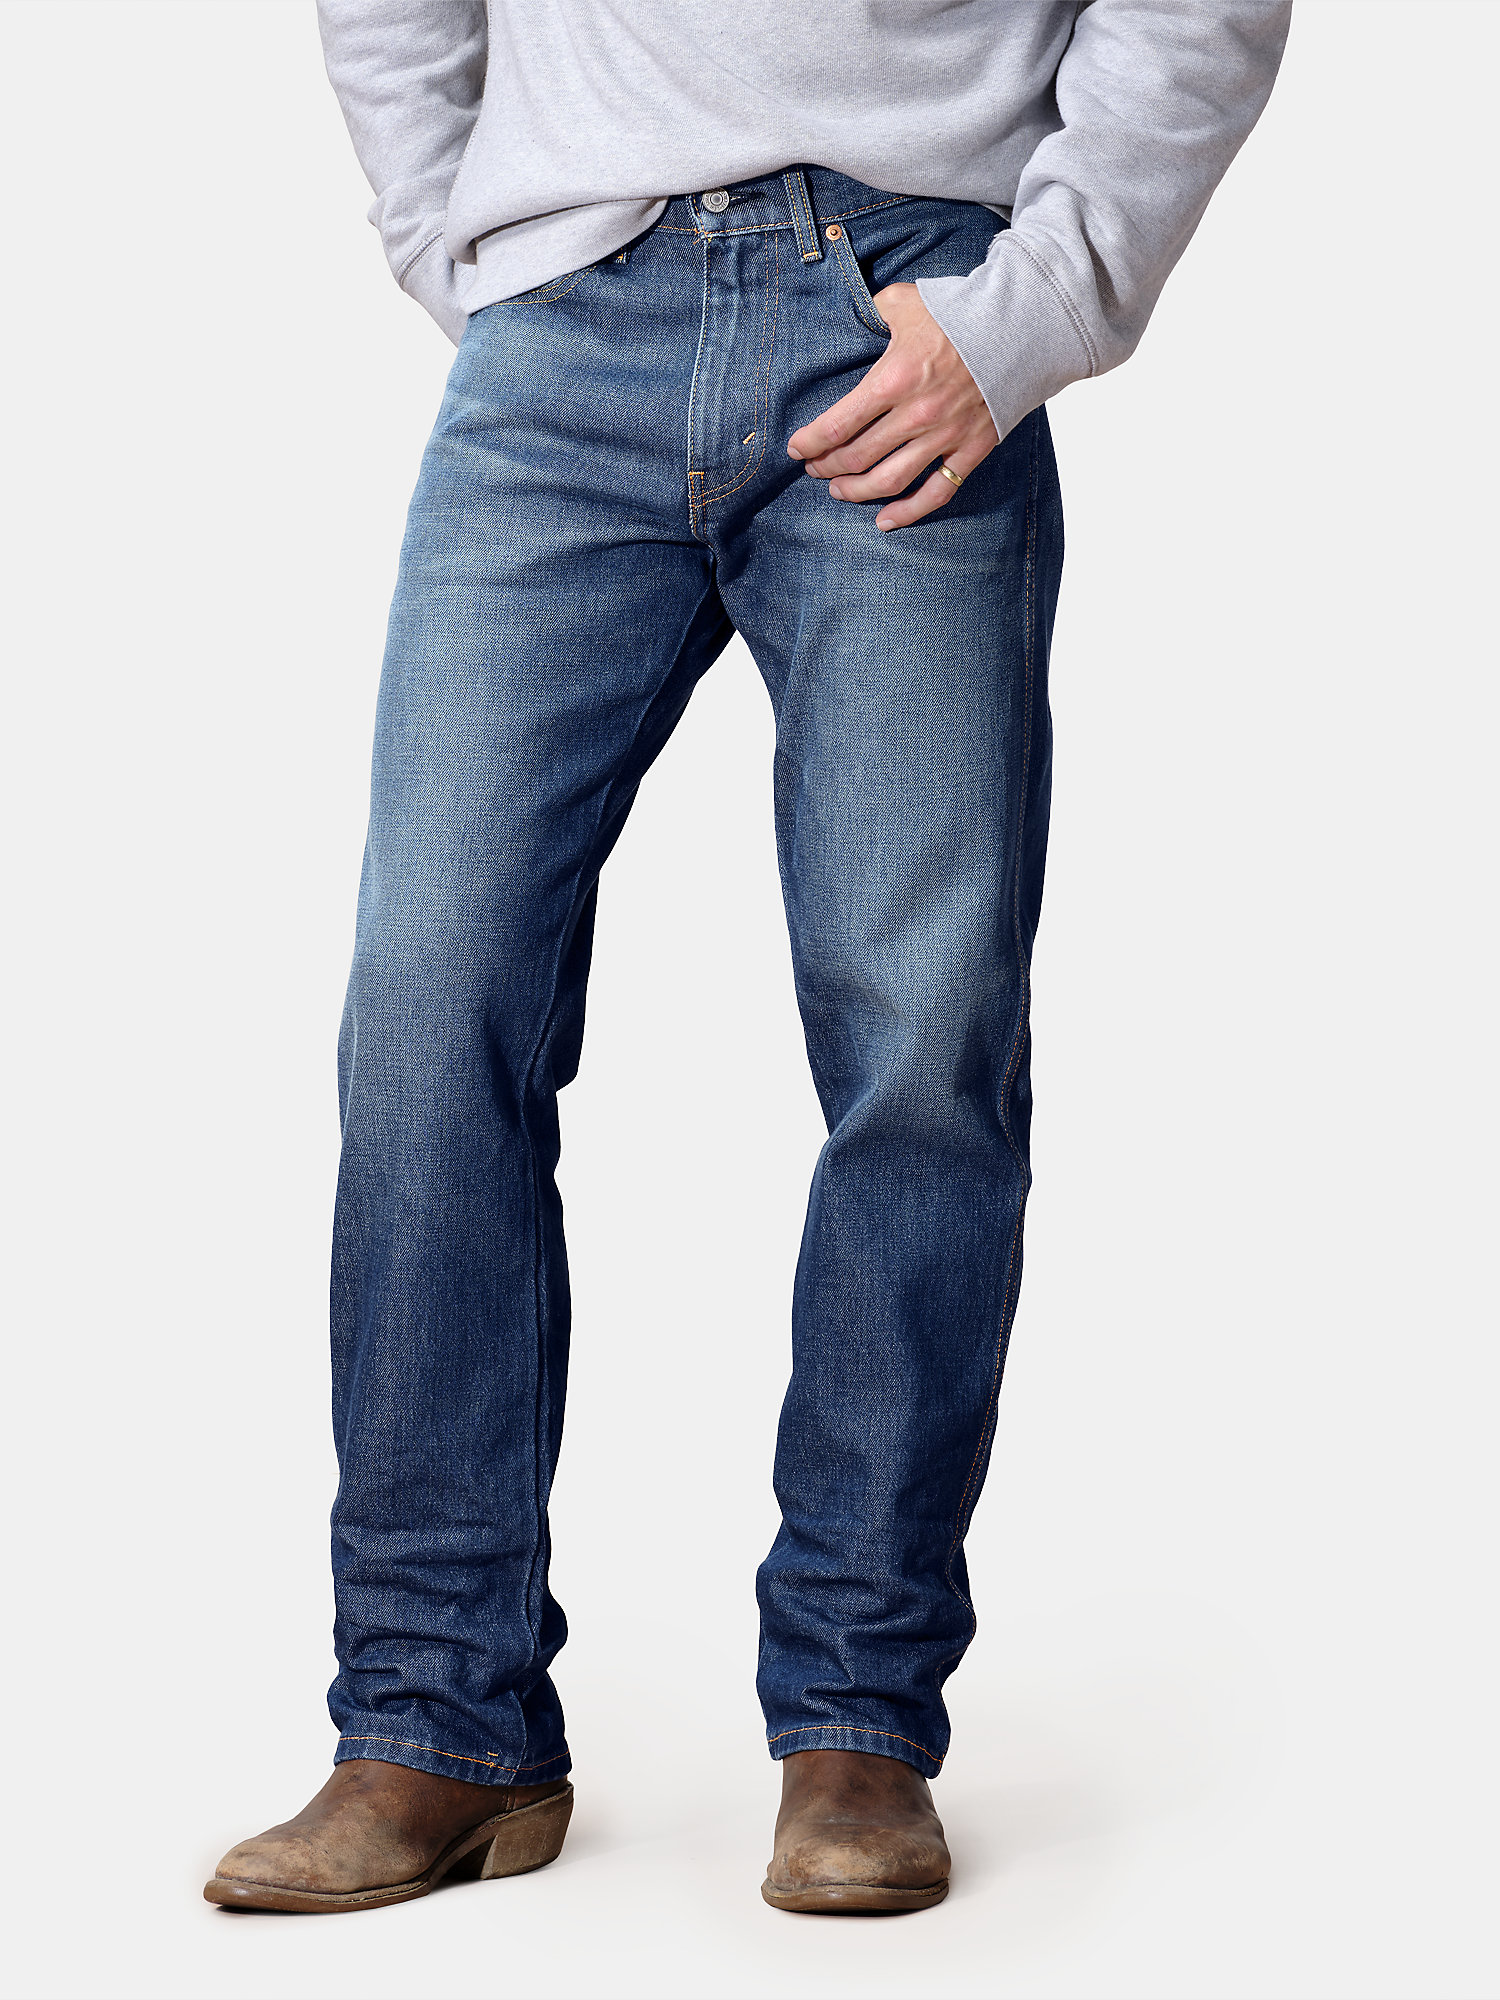 Levi's Men's Western Regular Fit Cowboy Jeans - image 1 of 9